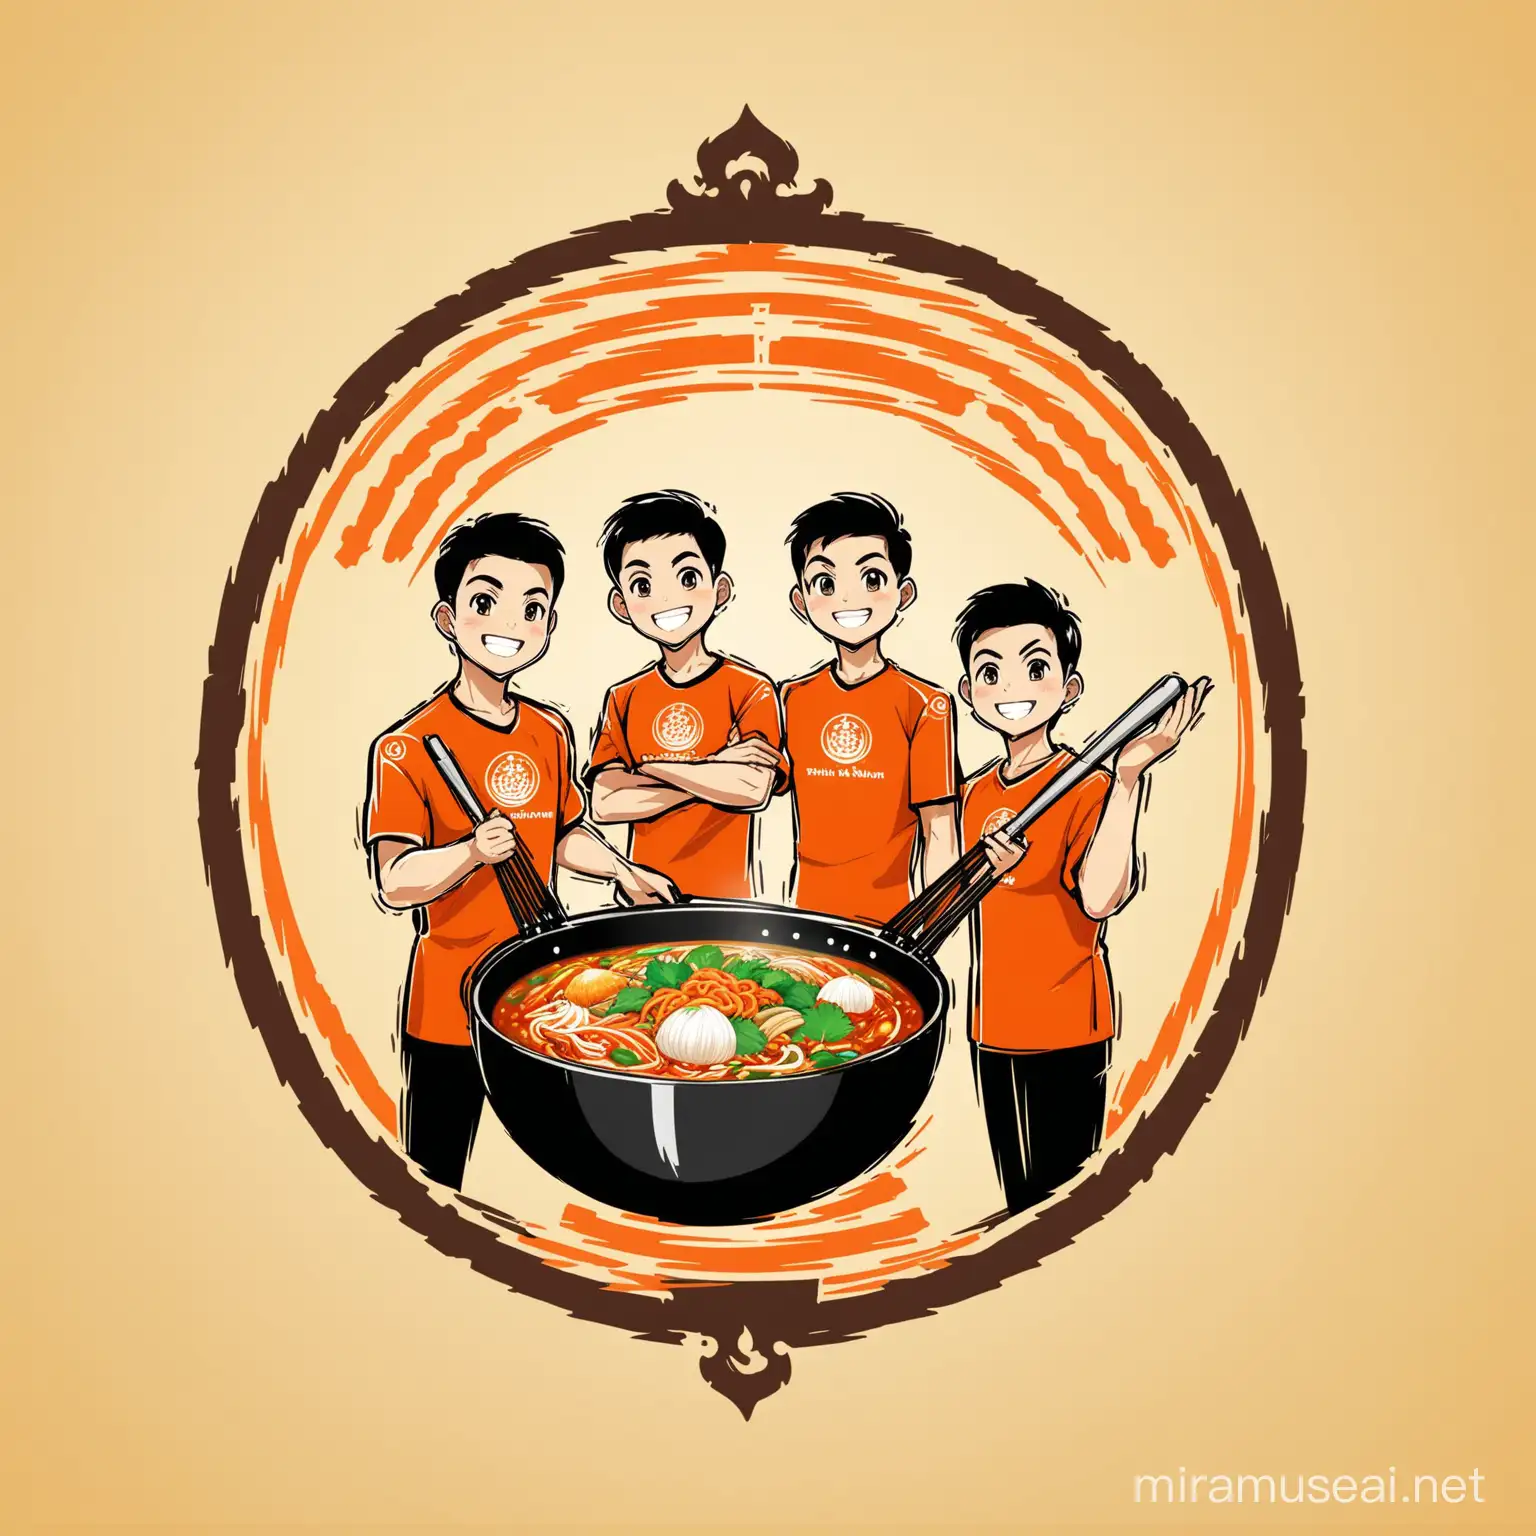 Business logo of 4 Thai guys holding a wok